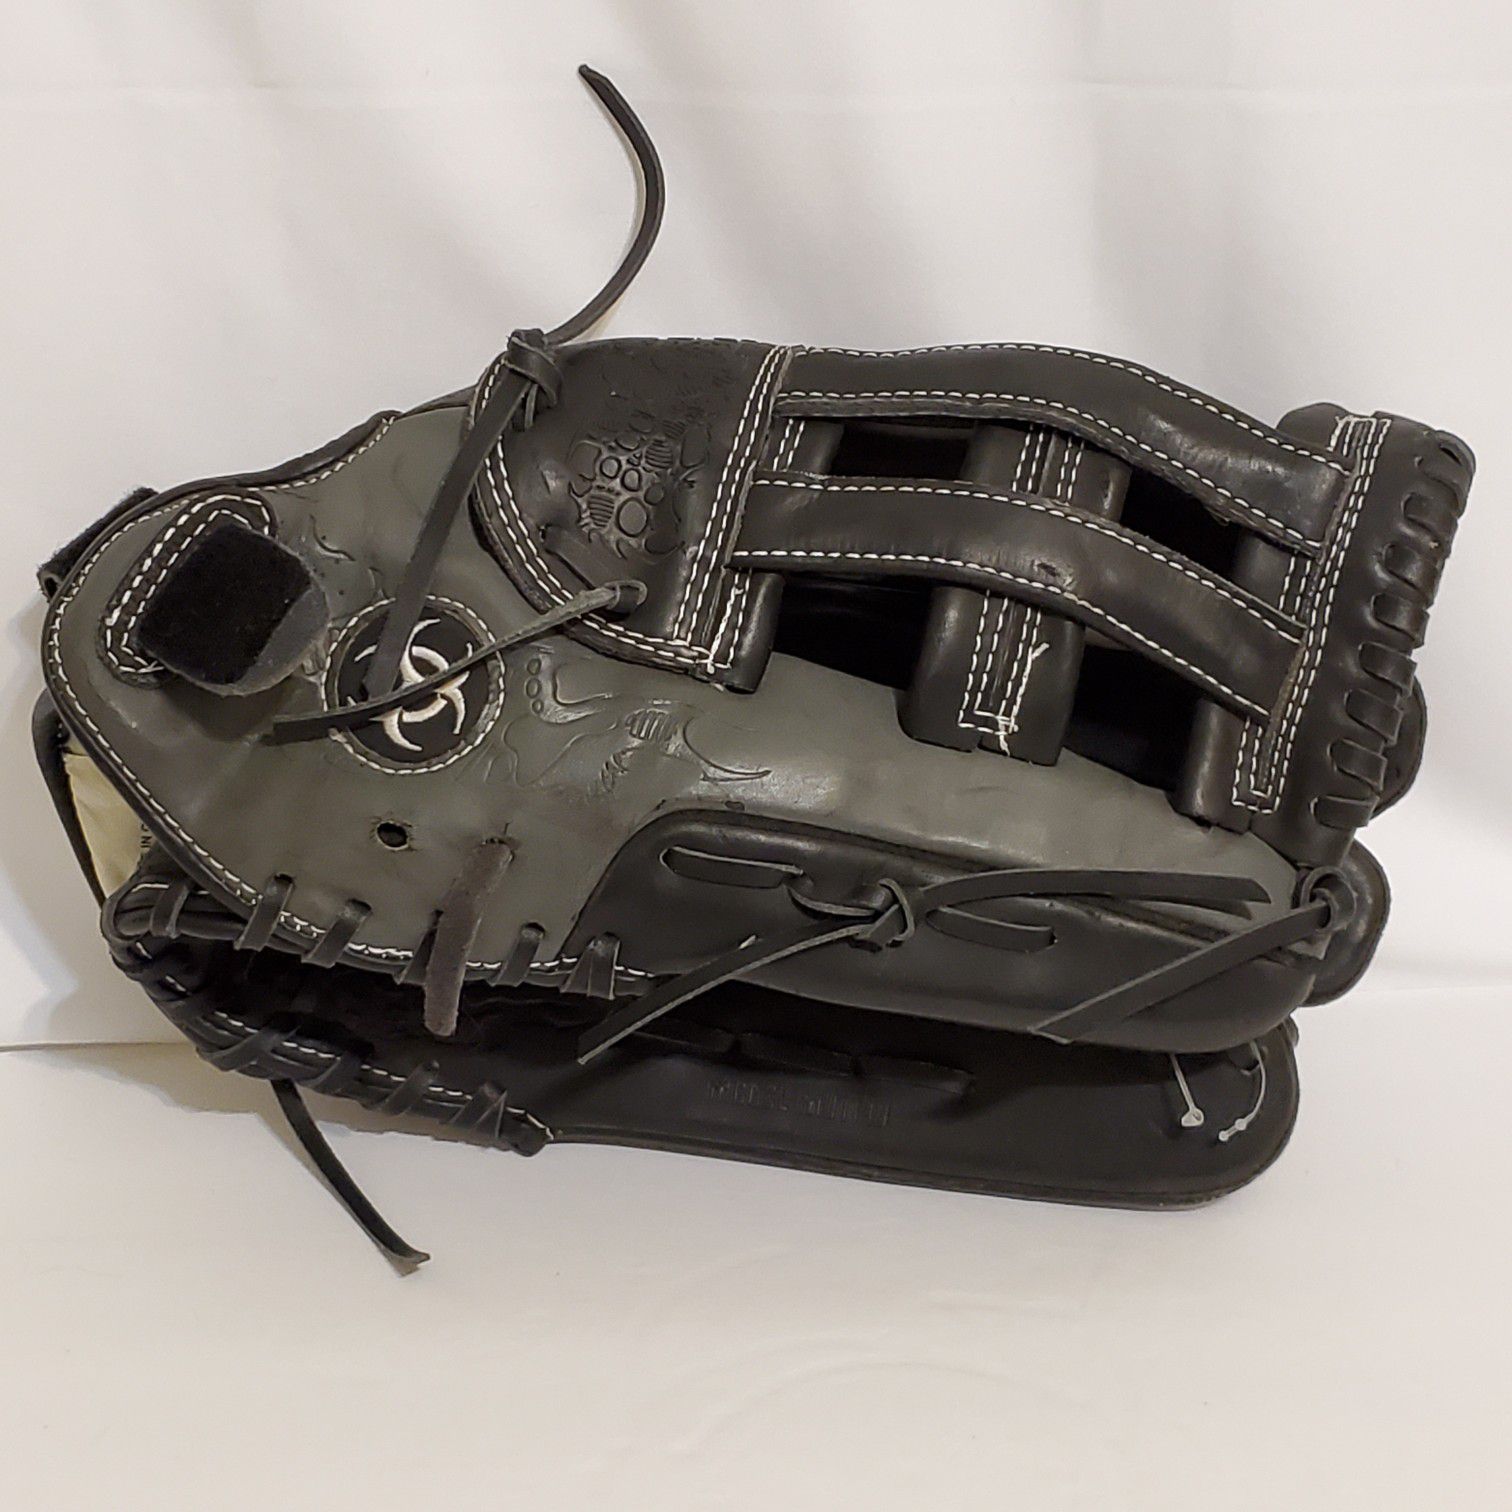 Worth Mutant 14" Baseball Softball Black Glove RHT